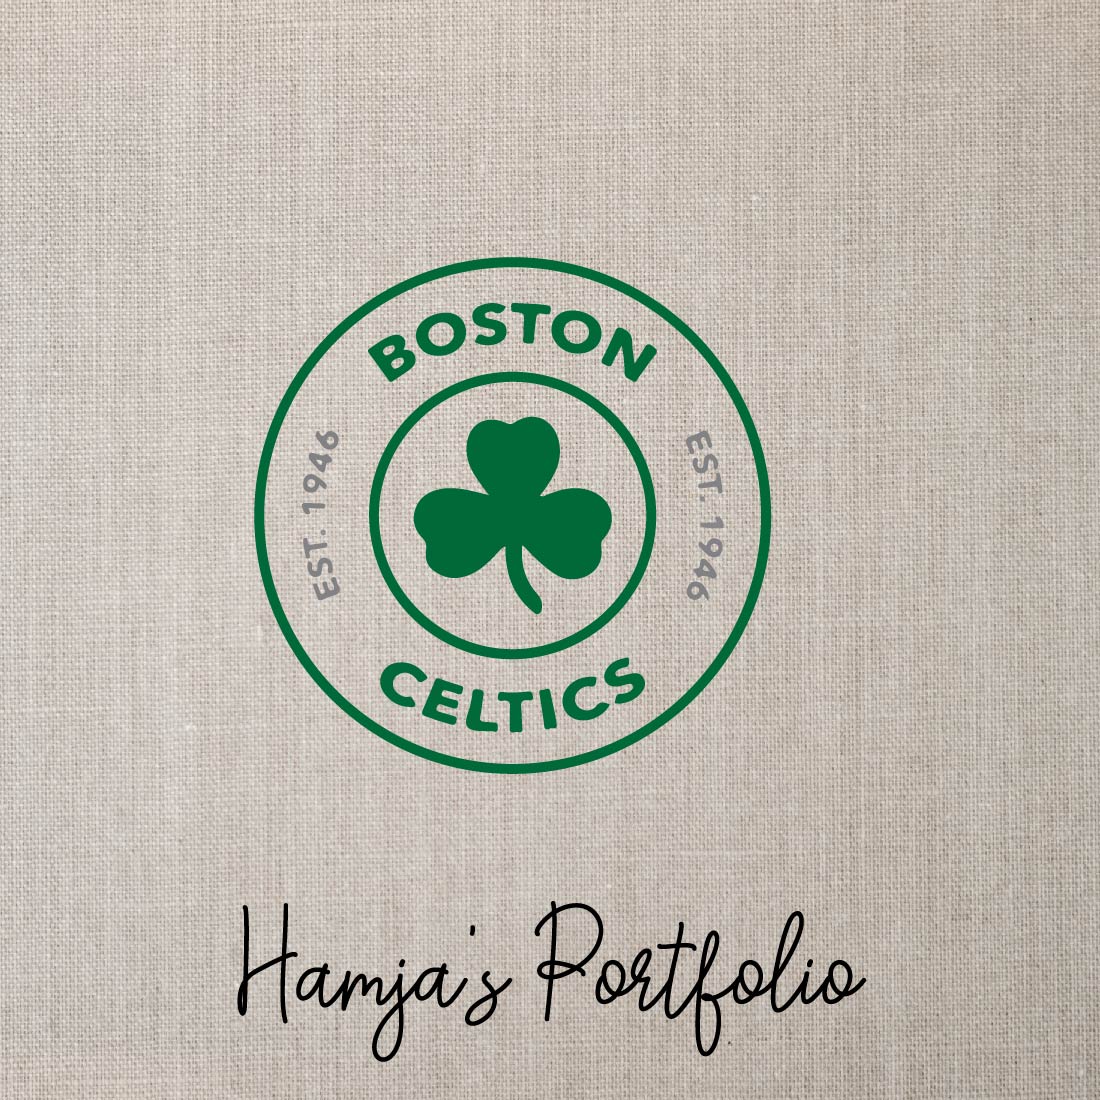 Bostonceltic Logo Vector Set preview image.